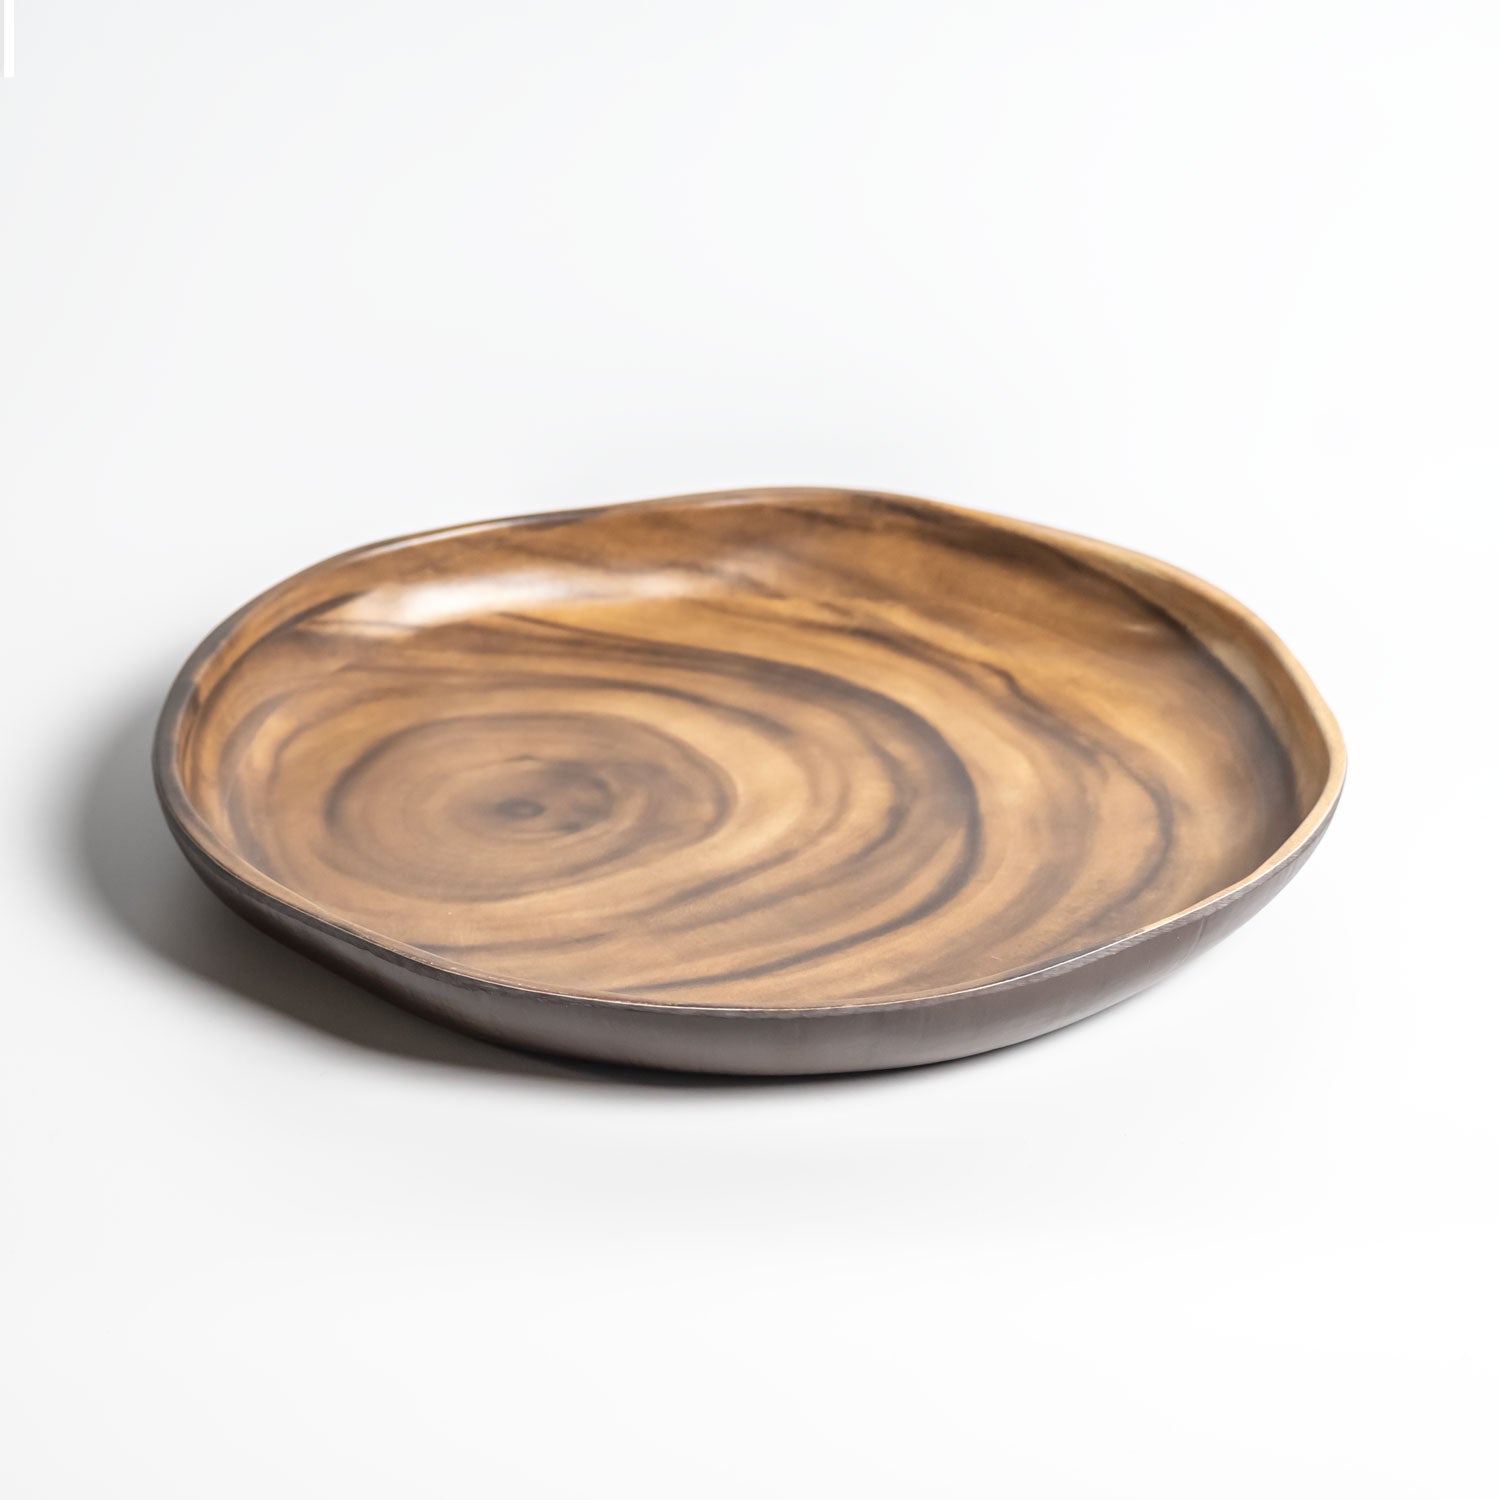 Merritt Designs Sequoia Wood 12 inch Melamine Serving Tray